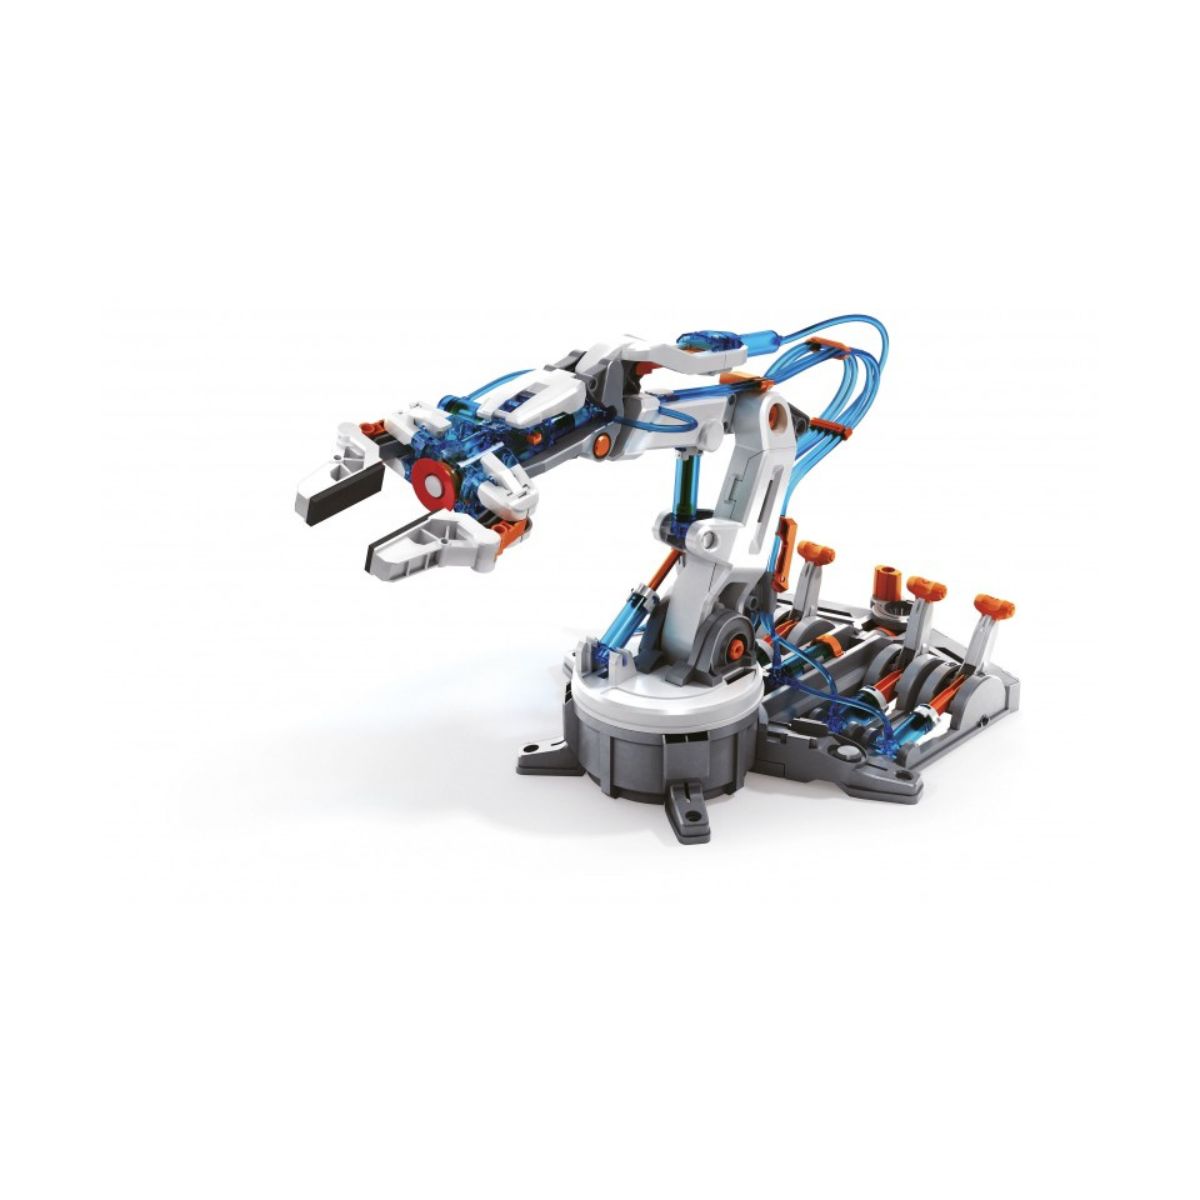 Keenso Bras de Robot Hydraulique 3 en 1, Kit de Bras de Robot Hydraulique  de Bricolage pour 8 Ans (101 Bleu)